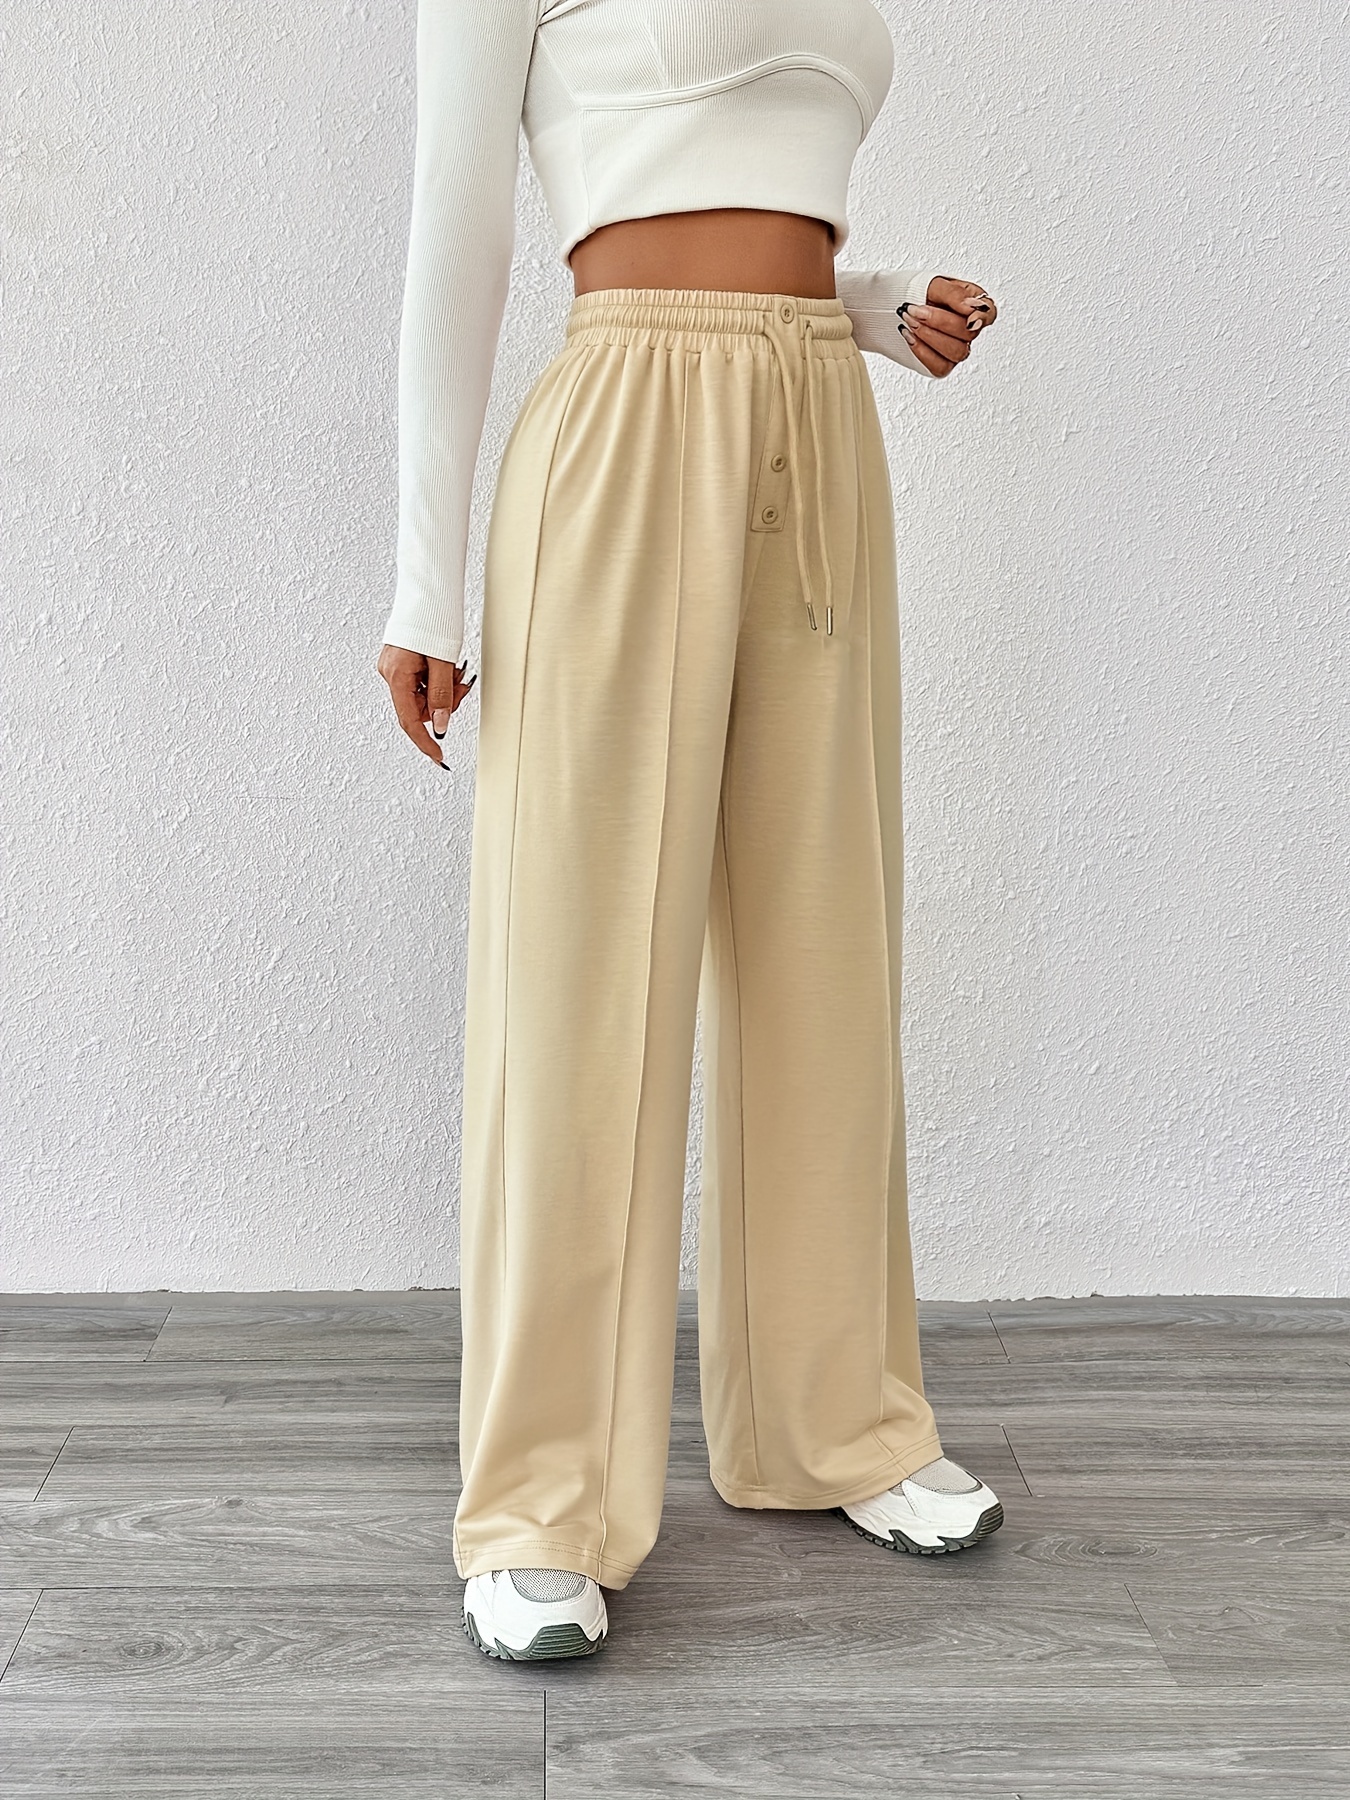 YWDJ Dressy Joggers for Women Women Casual Solid Cotton Linen Drawstring  Elastic Waist Calf Length Pencil Pants Beige S 